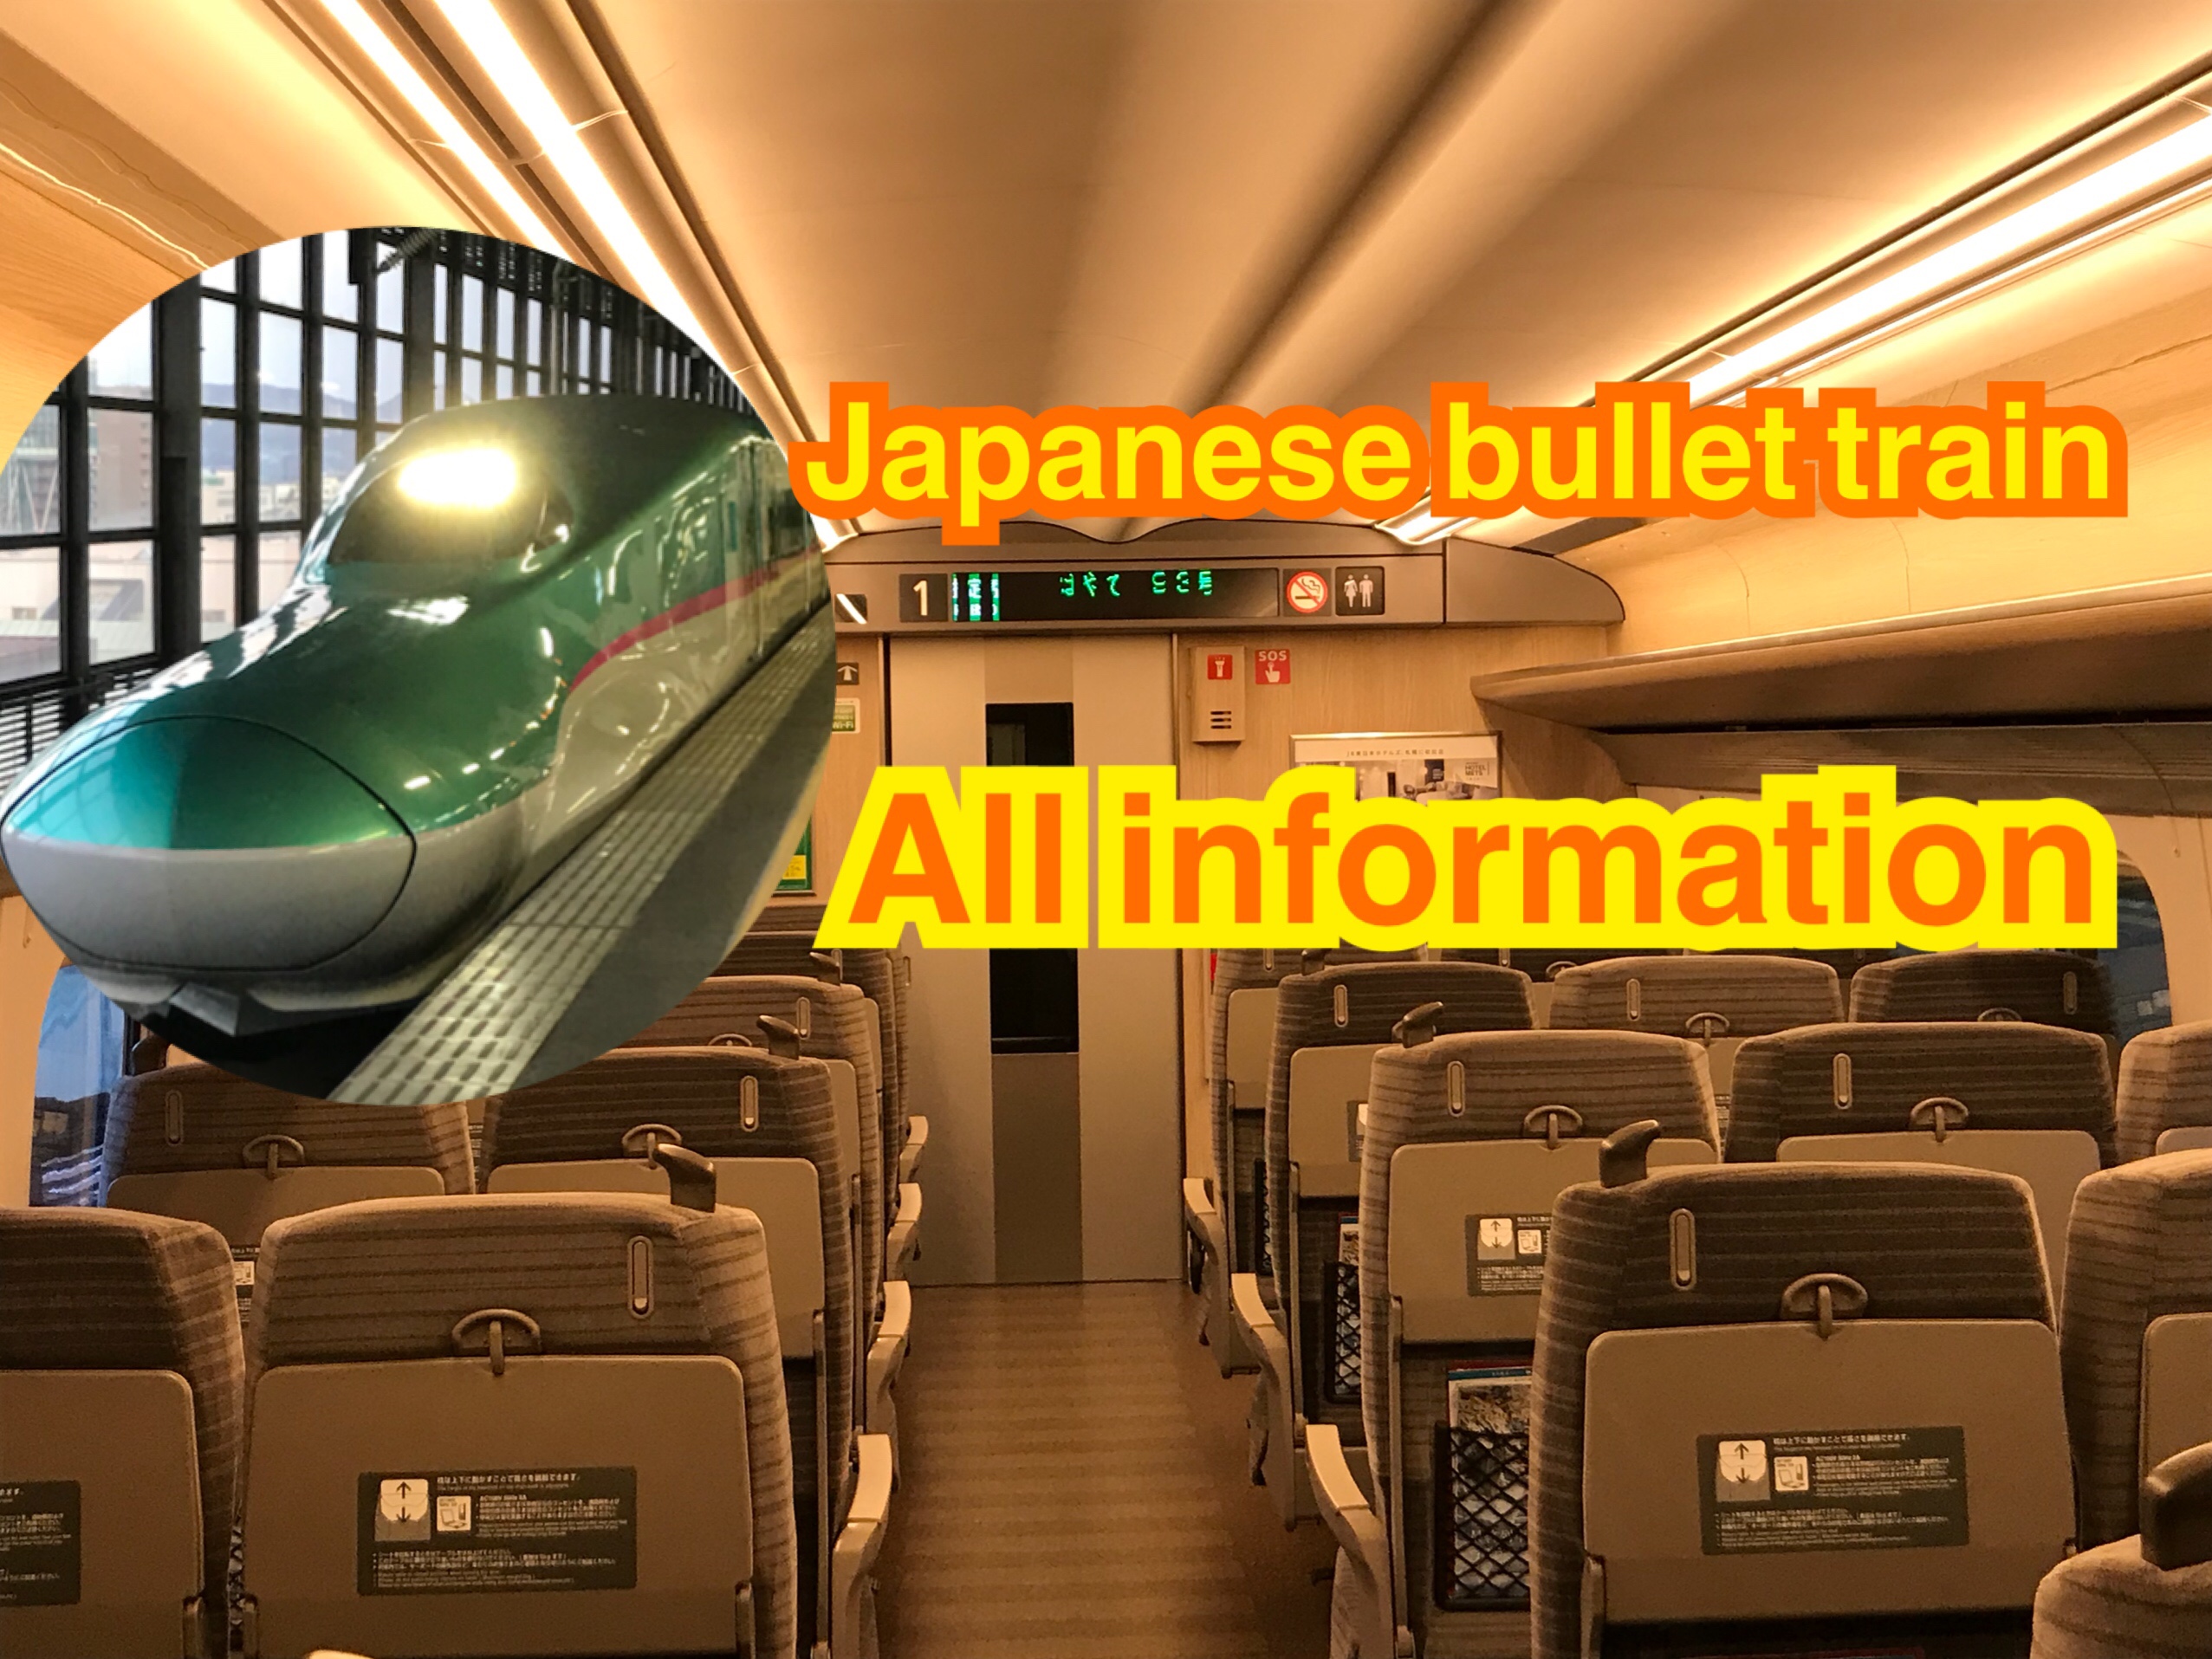 Shinkansen(Japanese bullet train) All information